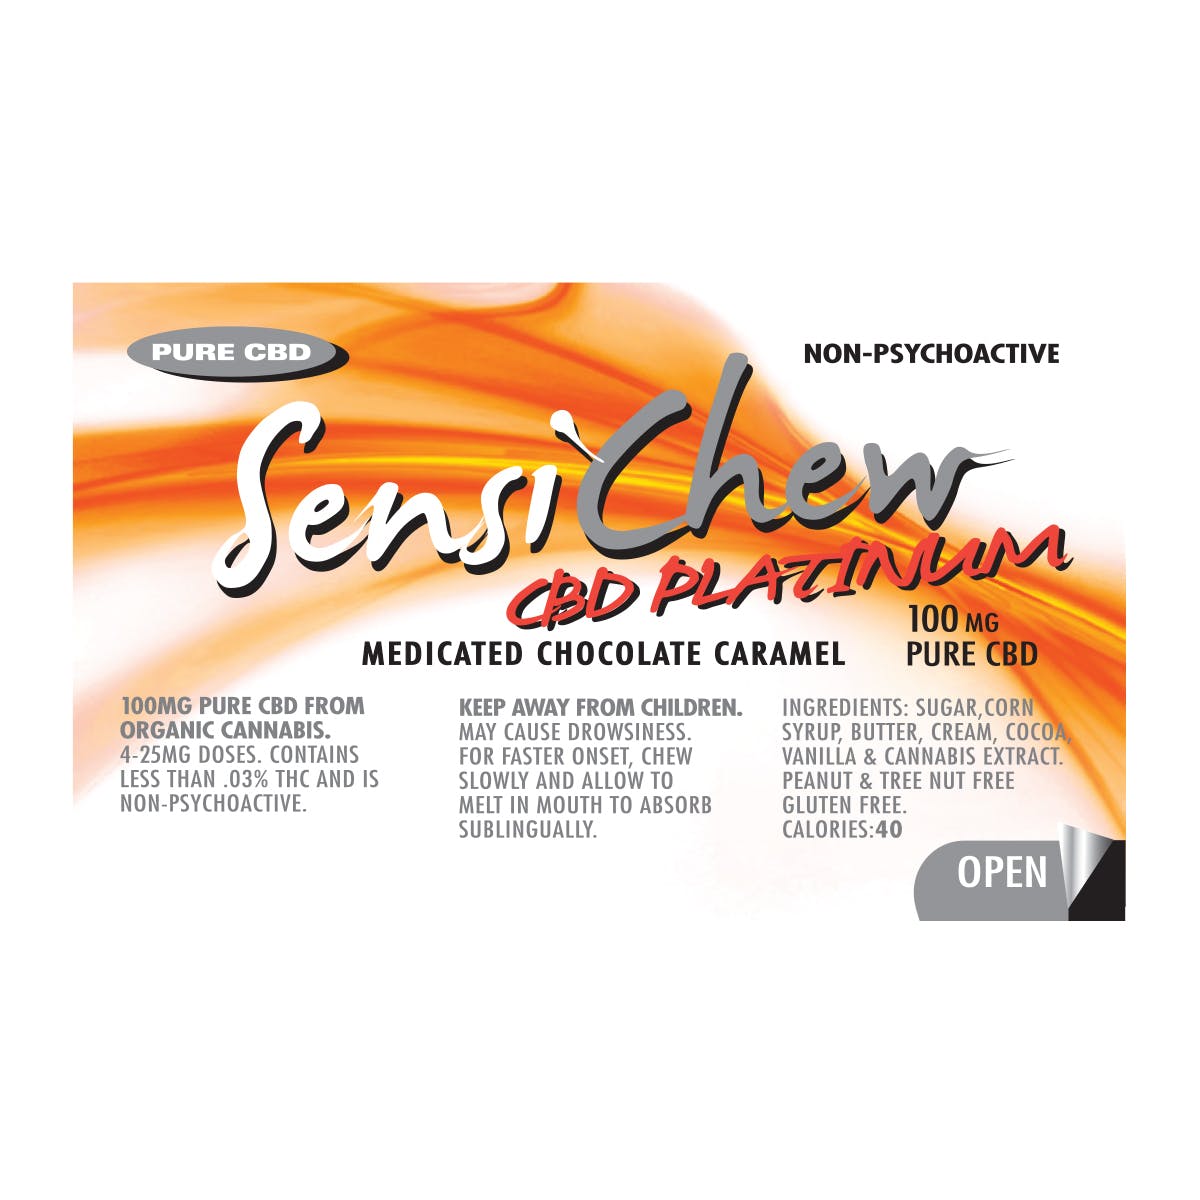 Sensi Chew CBD Platinum, 100mg